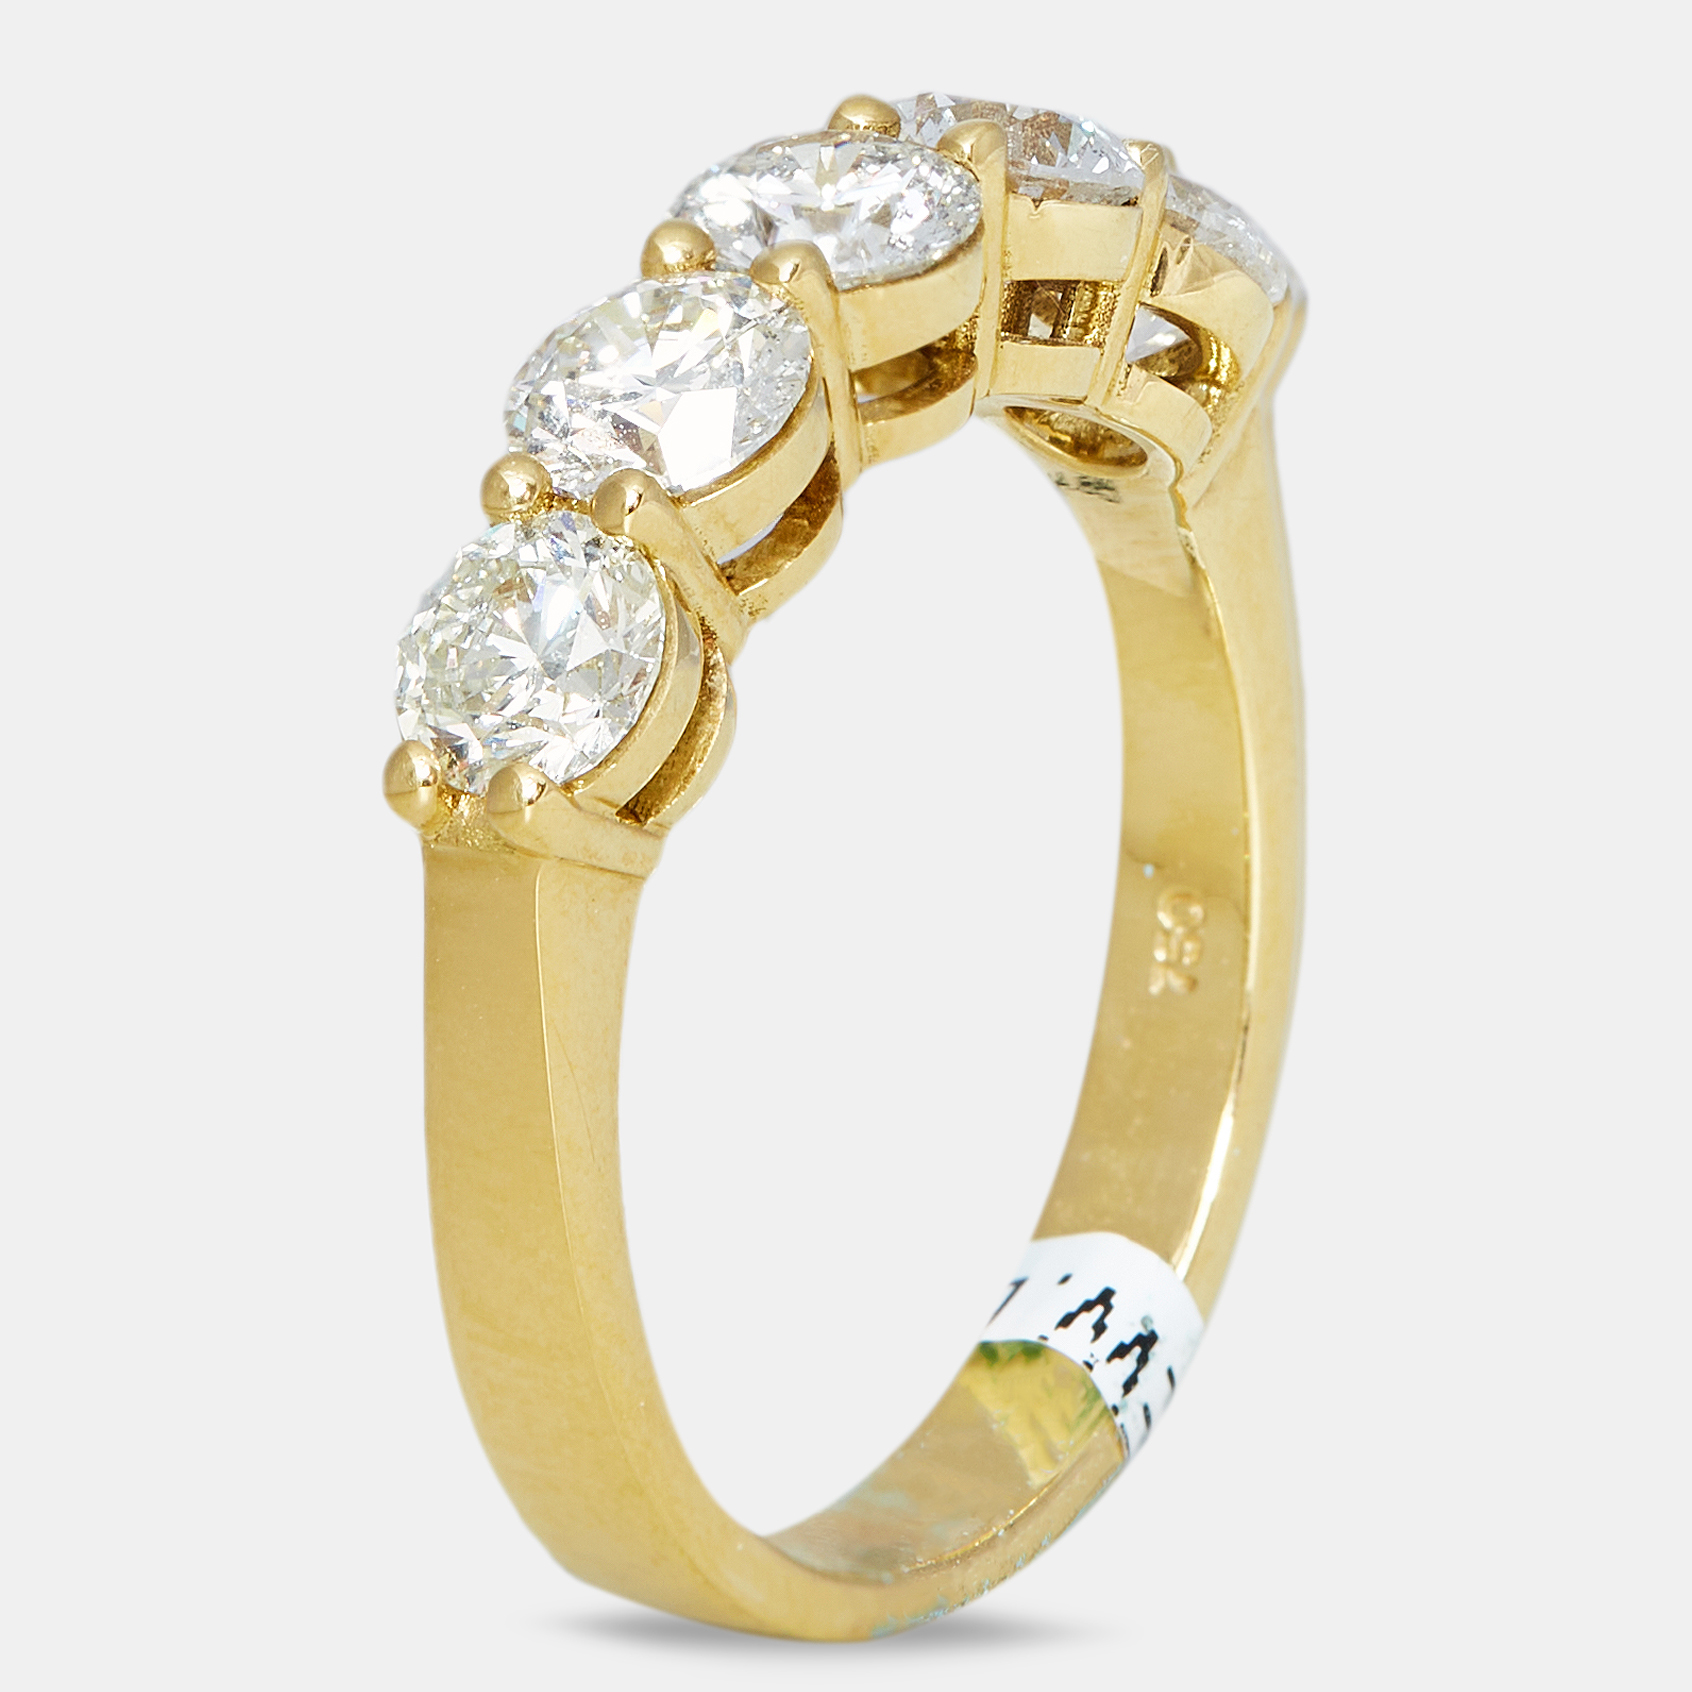 The diamond edit 18k yellow gold 2 ct diamond ring eu 55